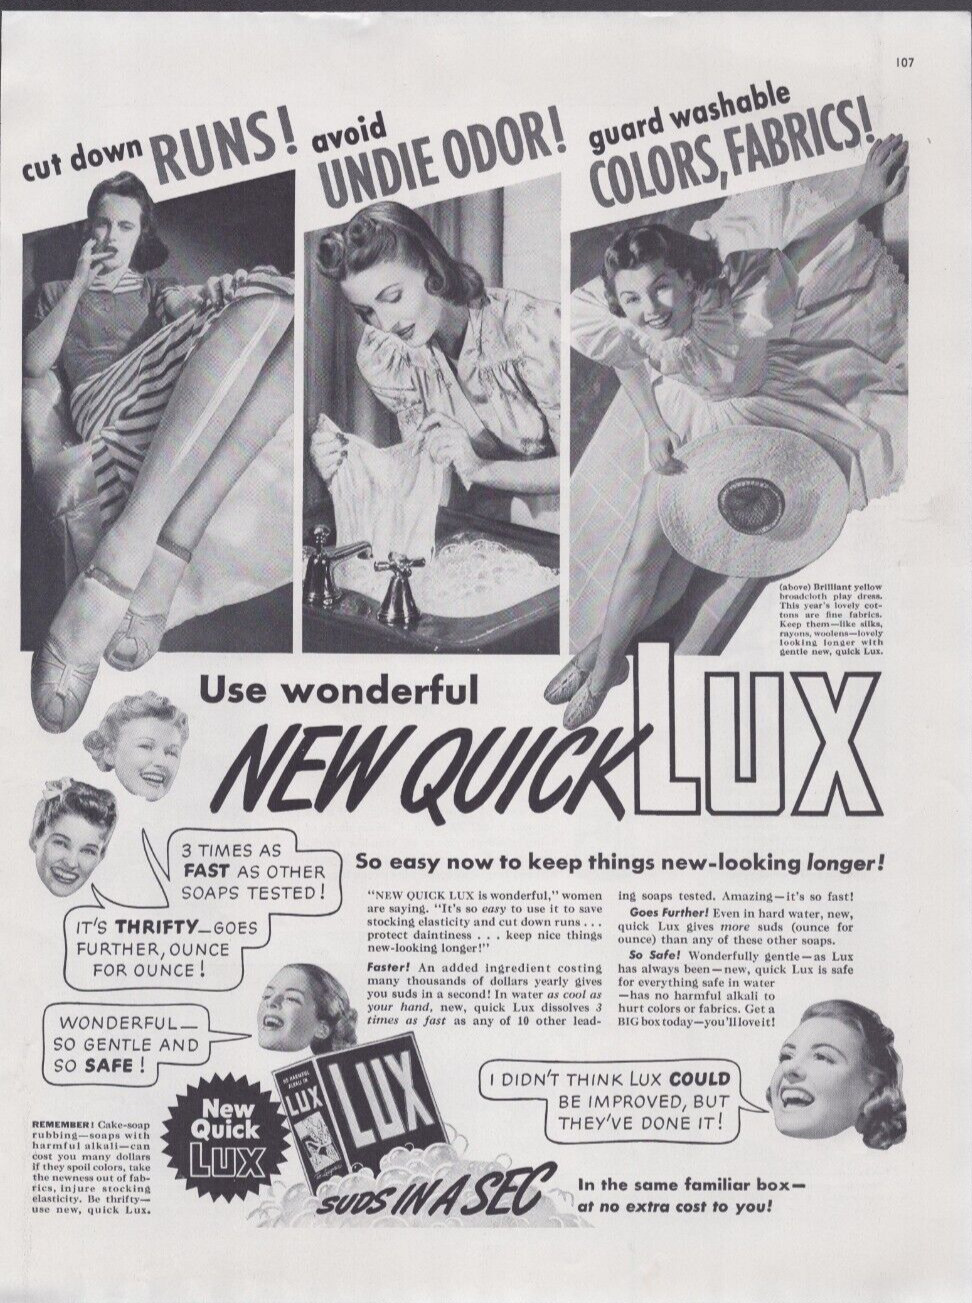 1940 Print Ad Lux Soap Laundry Cut down runs avoid undie odor guard washable